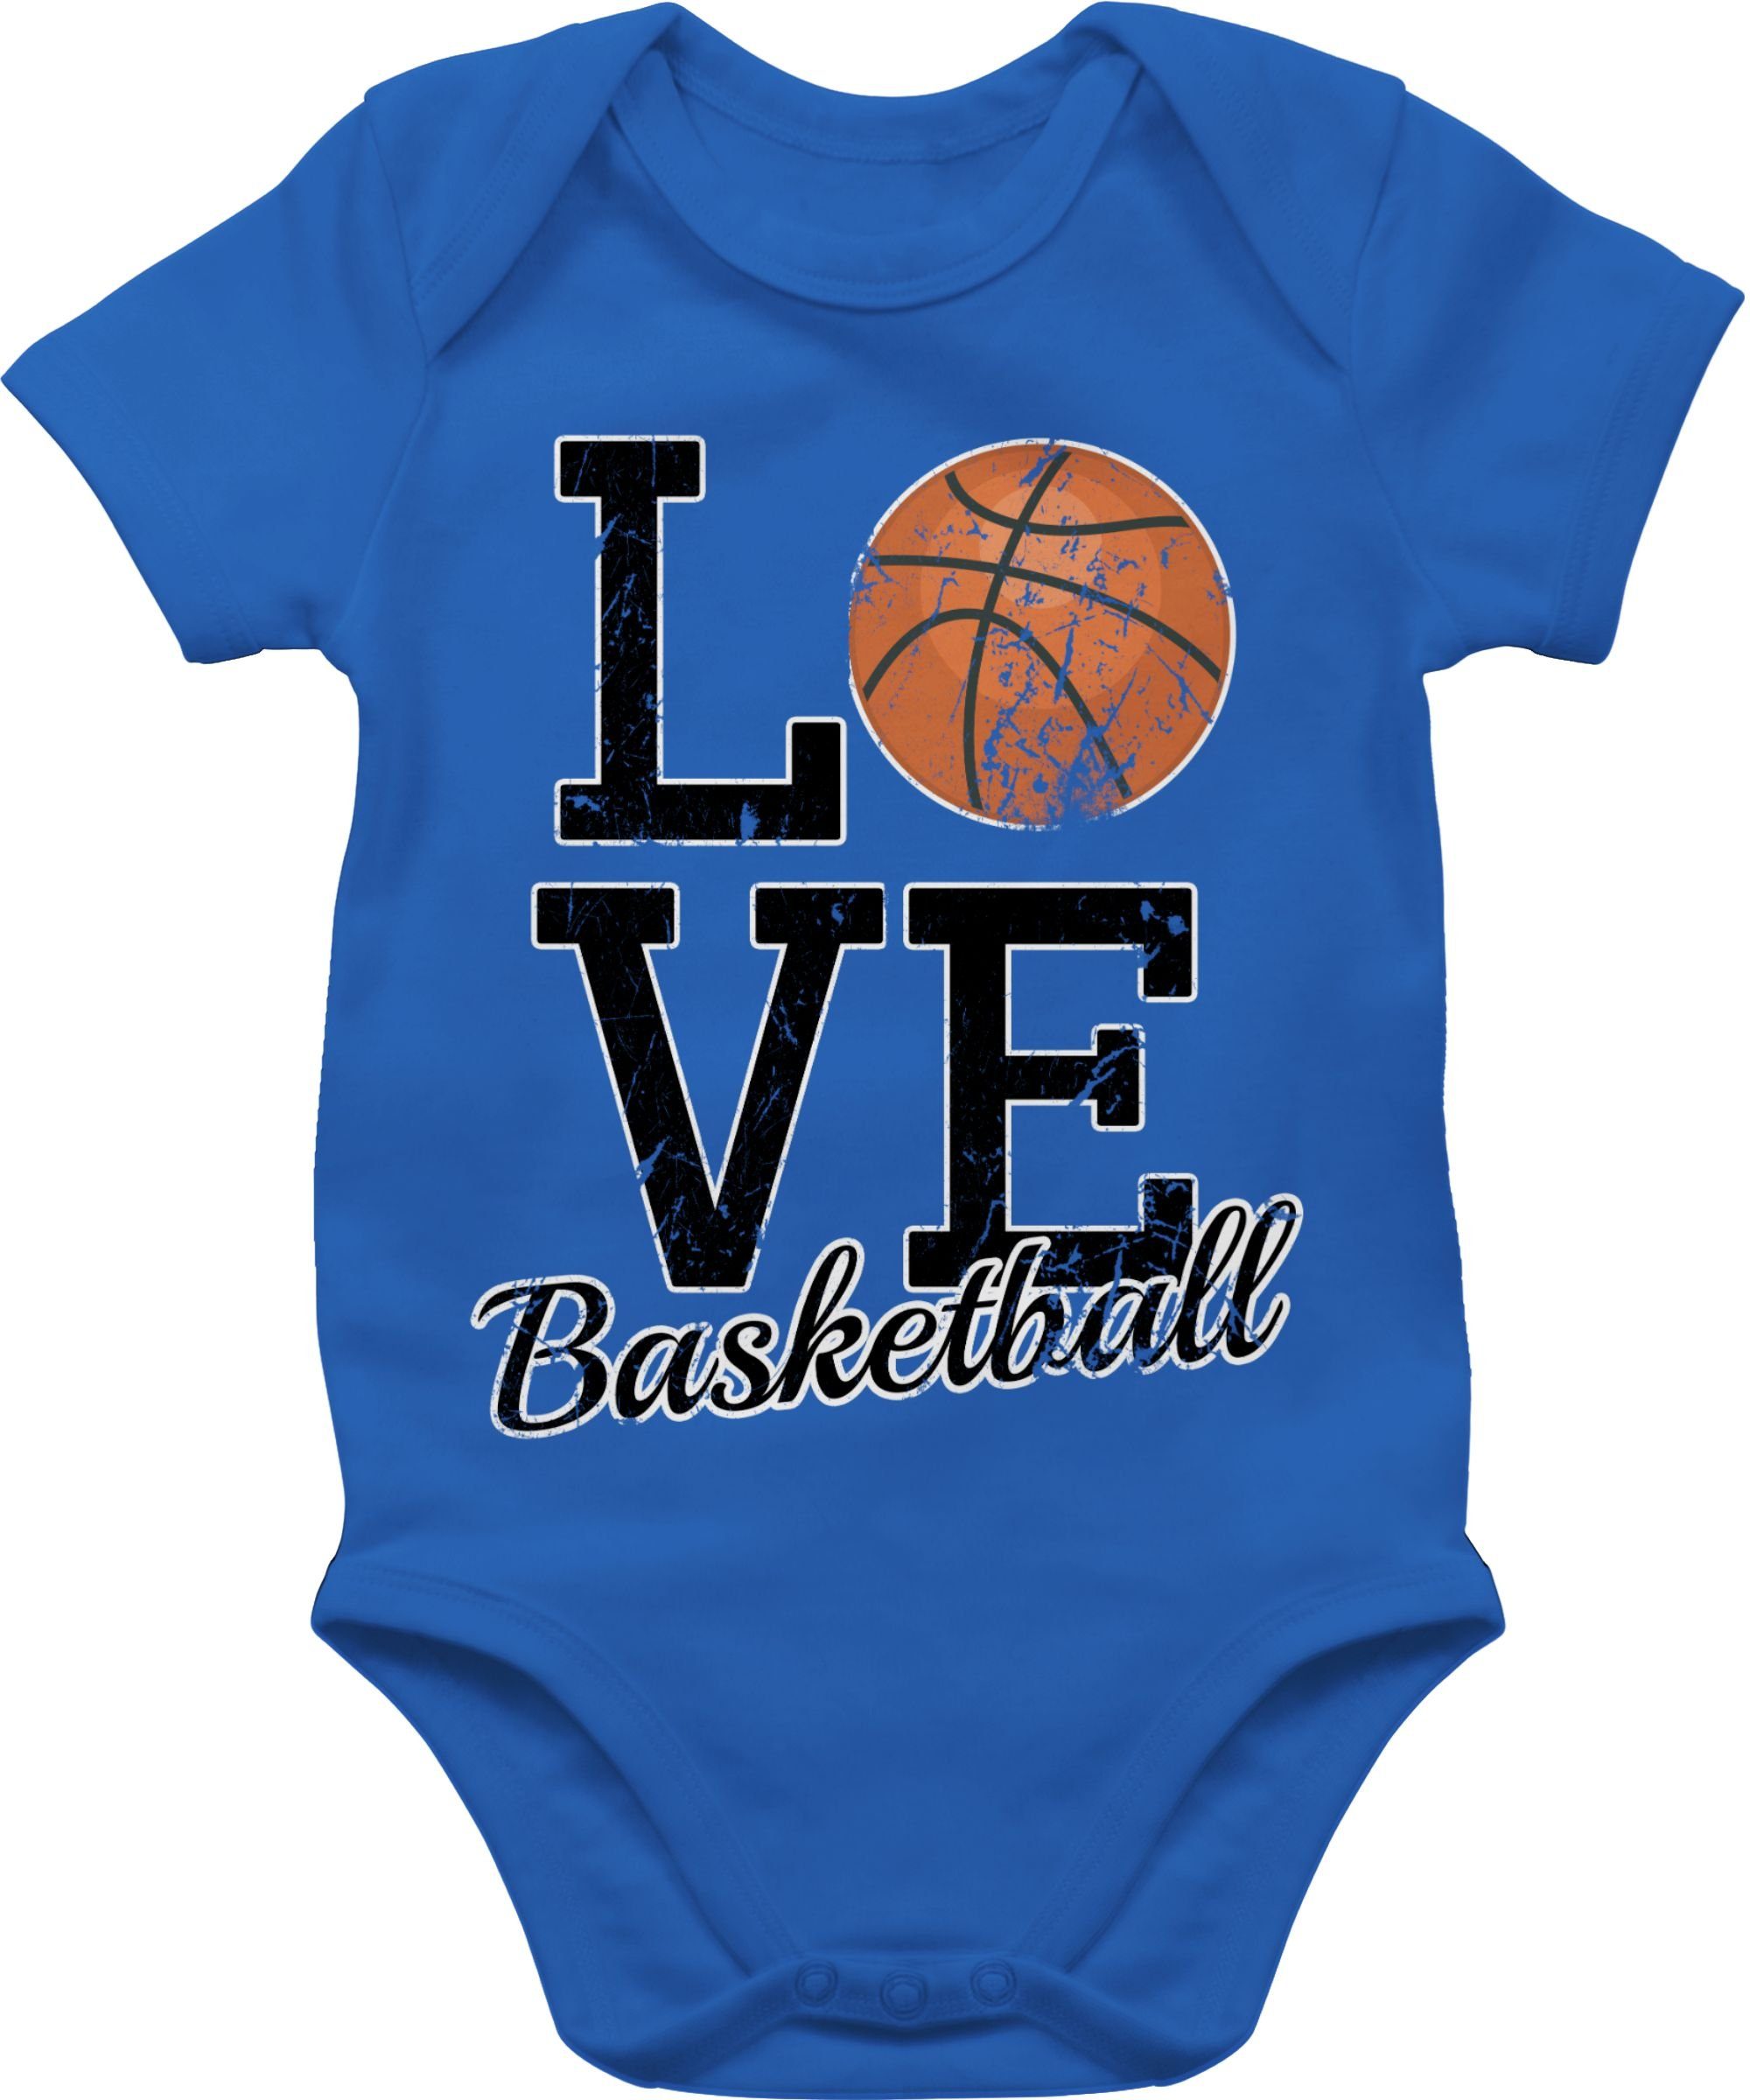 Shirtbody Baby 2 & Sport Love Bewegung Basketball Royalblau Shirtracer